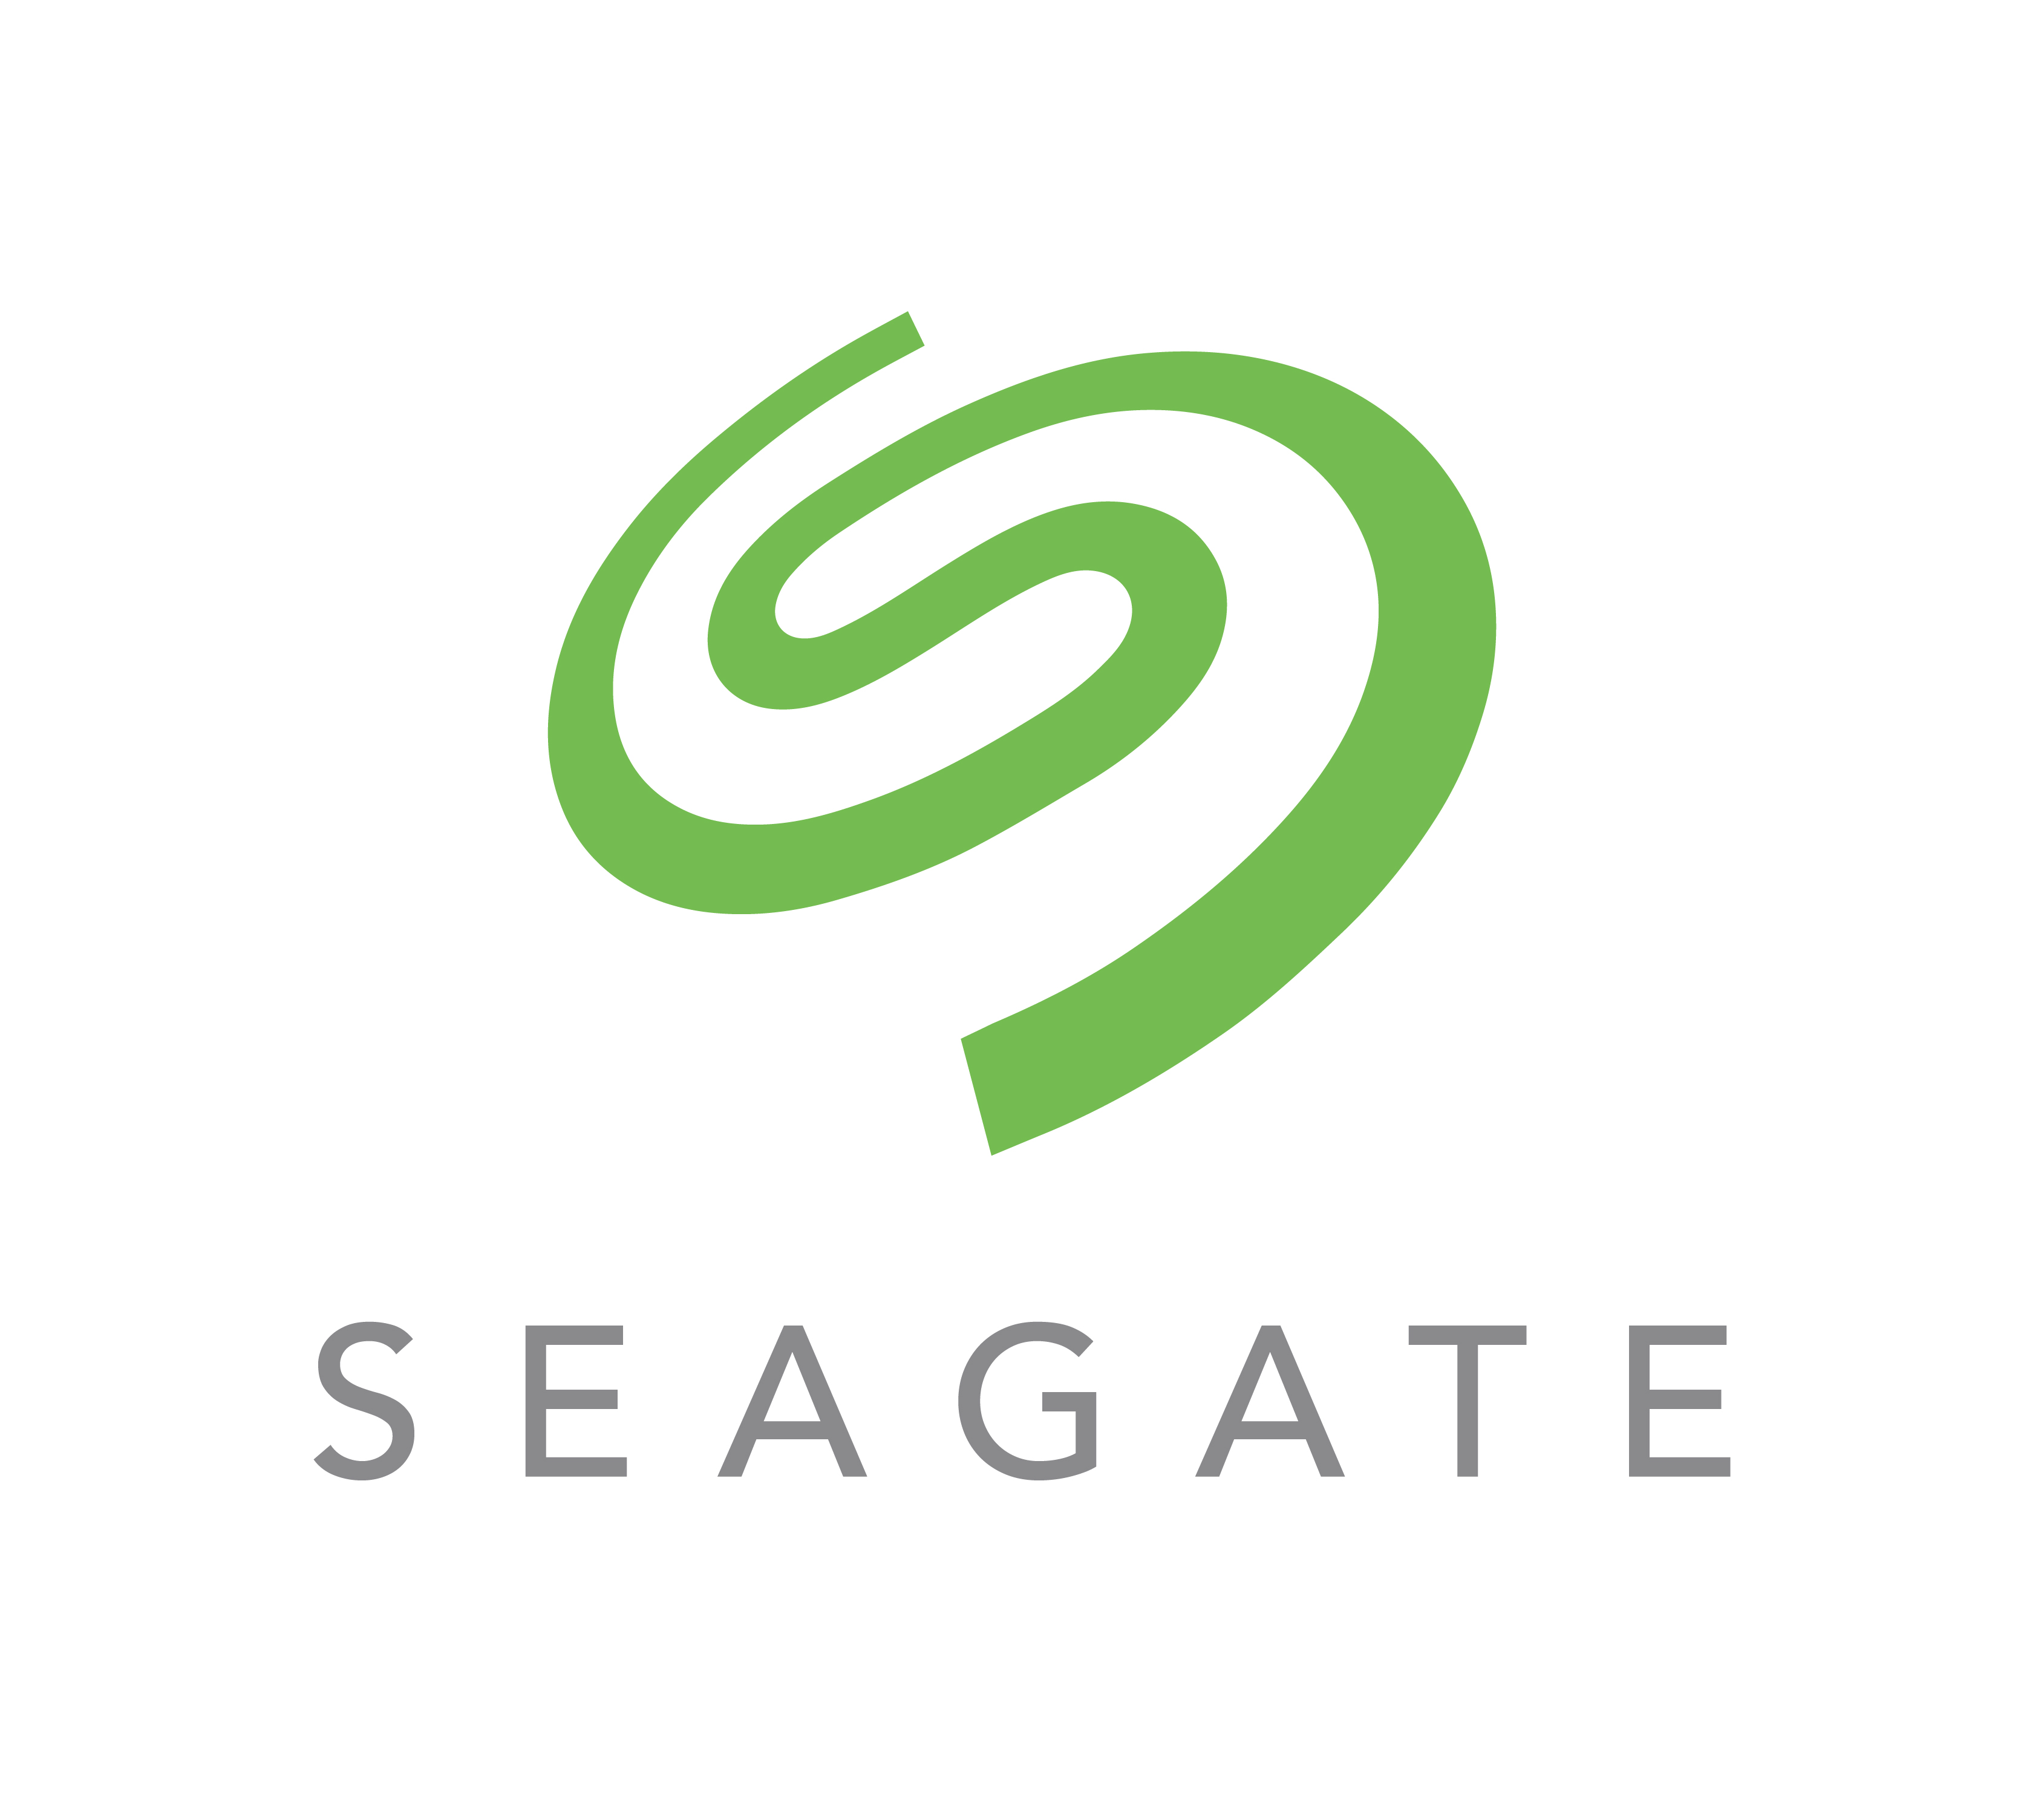 Seagate hard drives company logo.